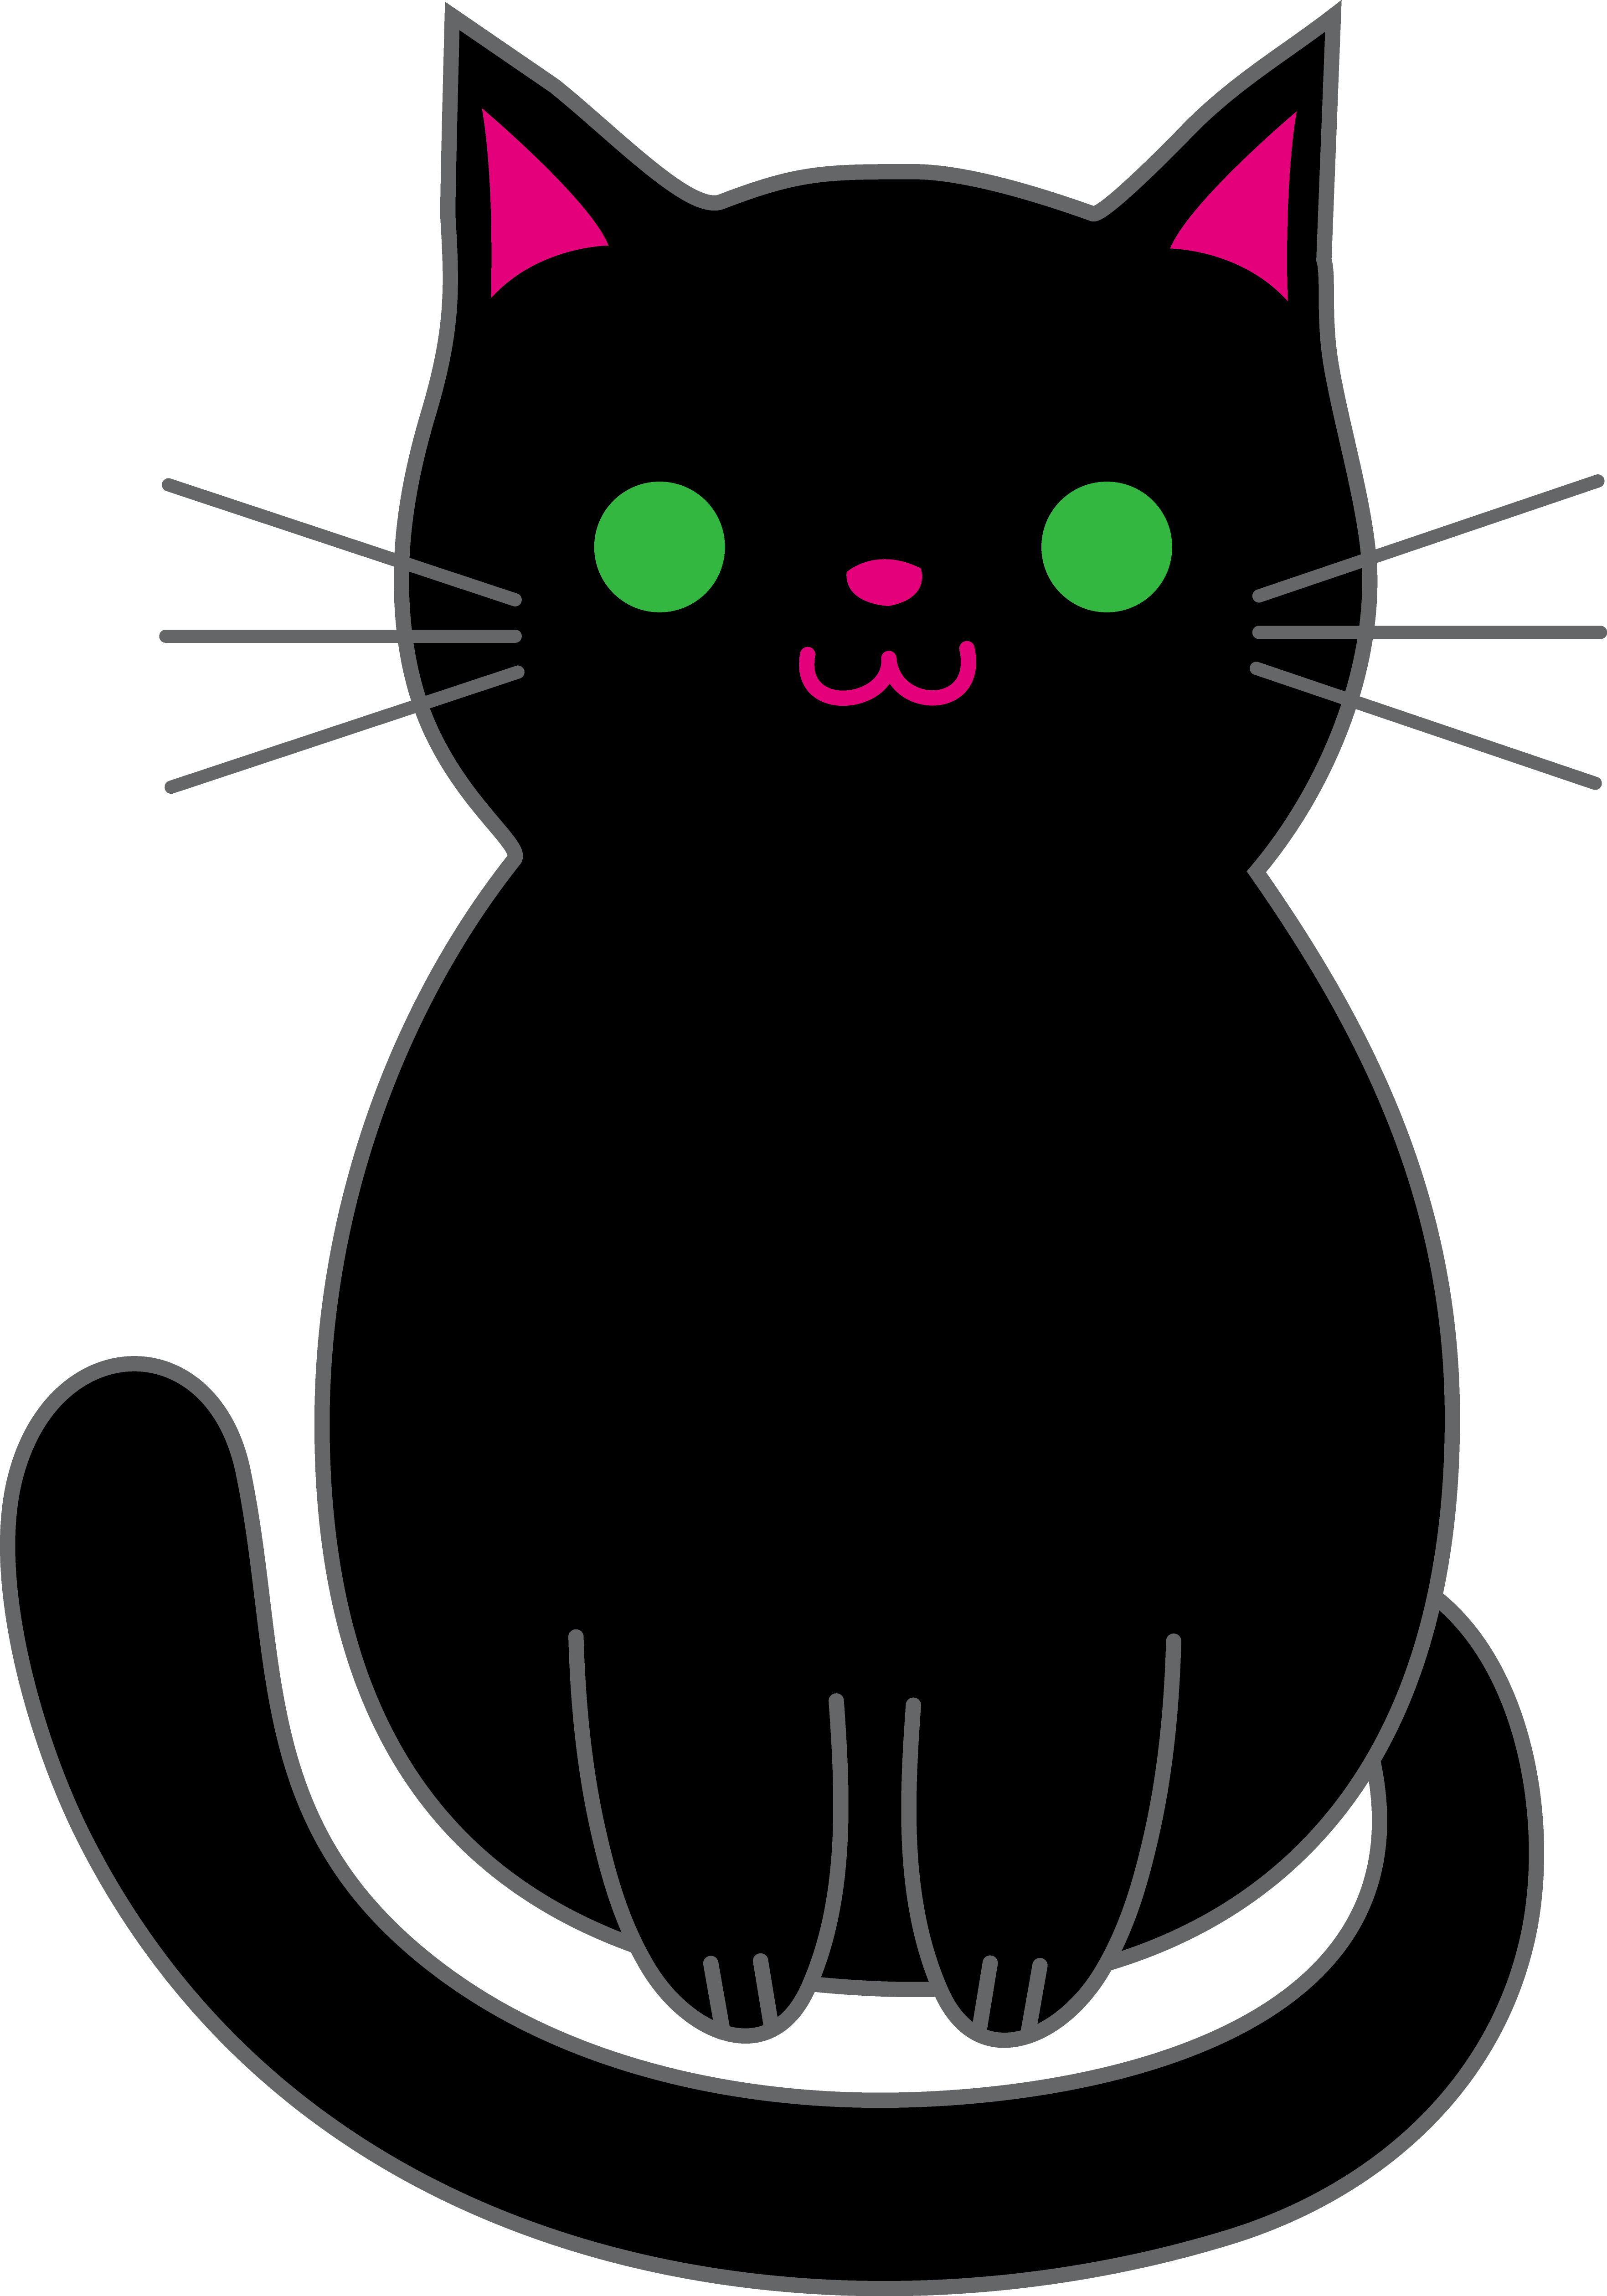 Halloween Black Cat Cartoon | Free Download Clip Art | Free Clip ...